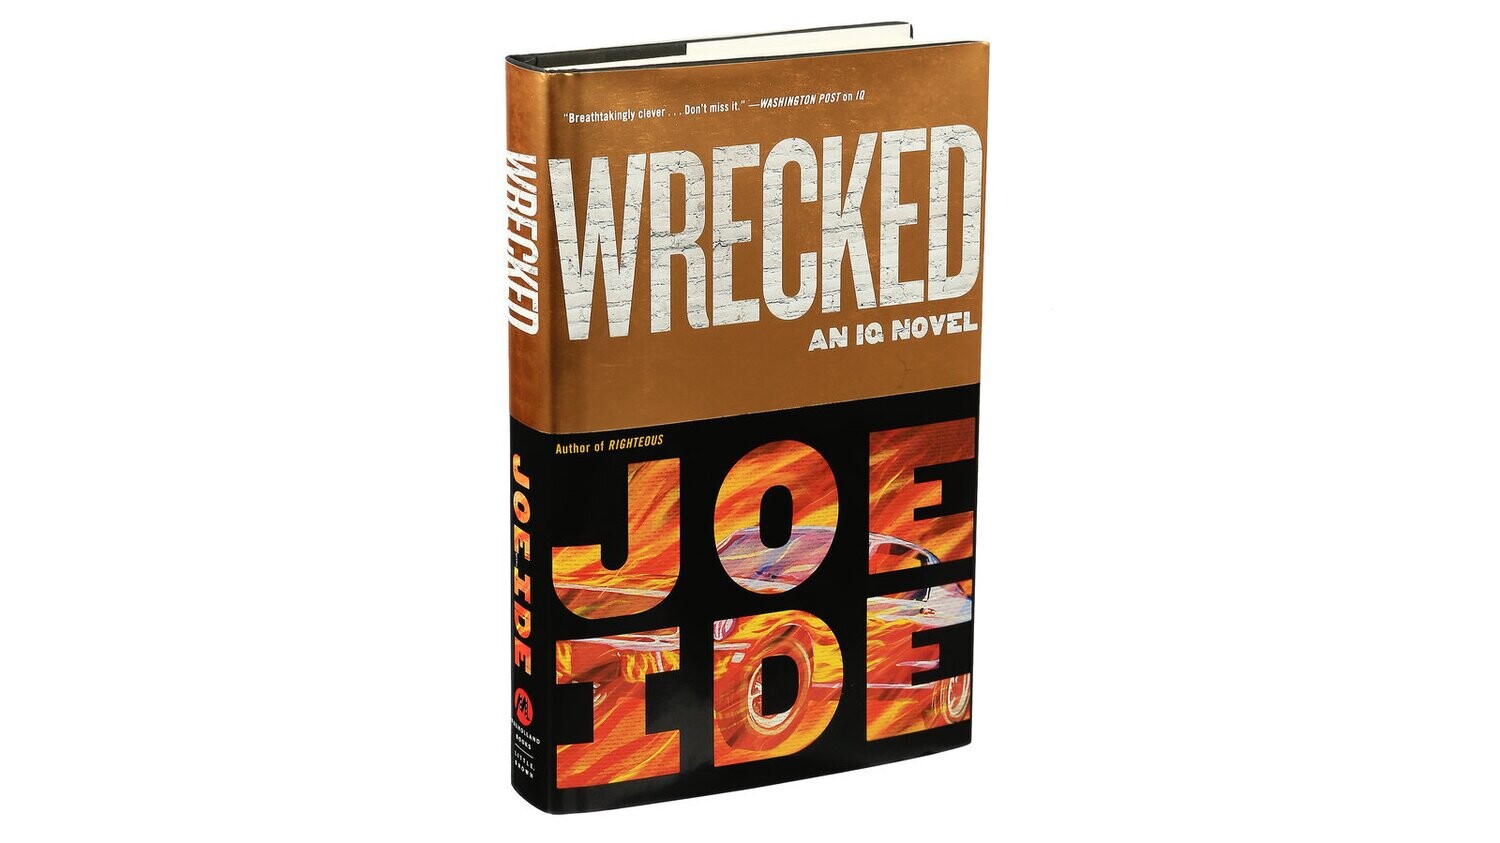 Wrecked (IQ Novel #3) by Joe Ide